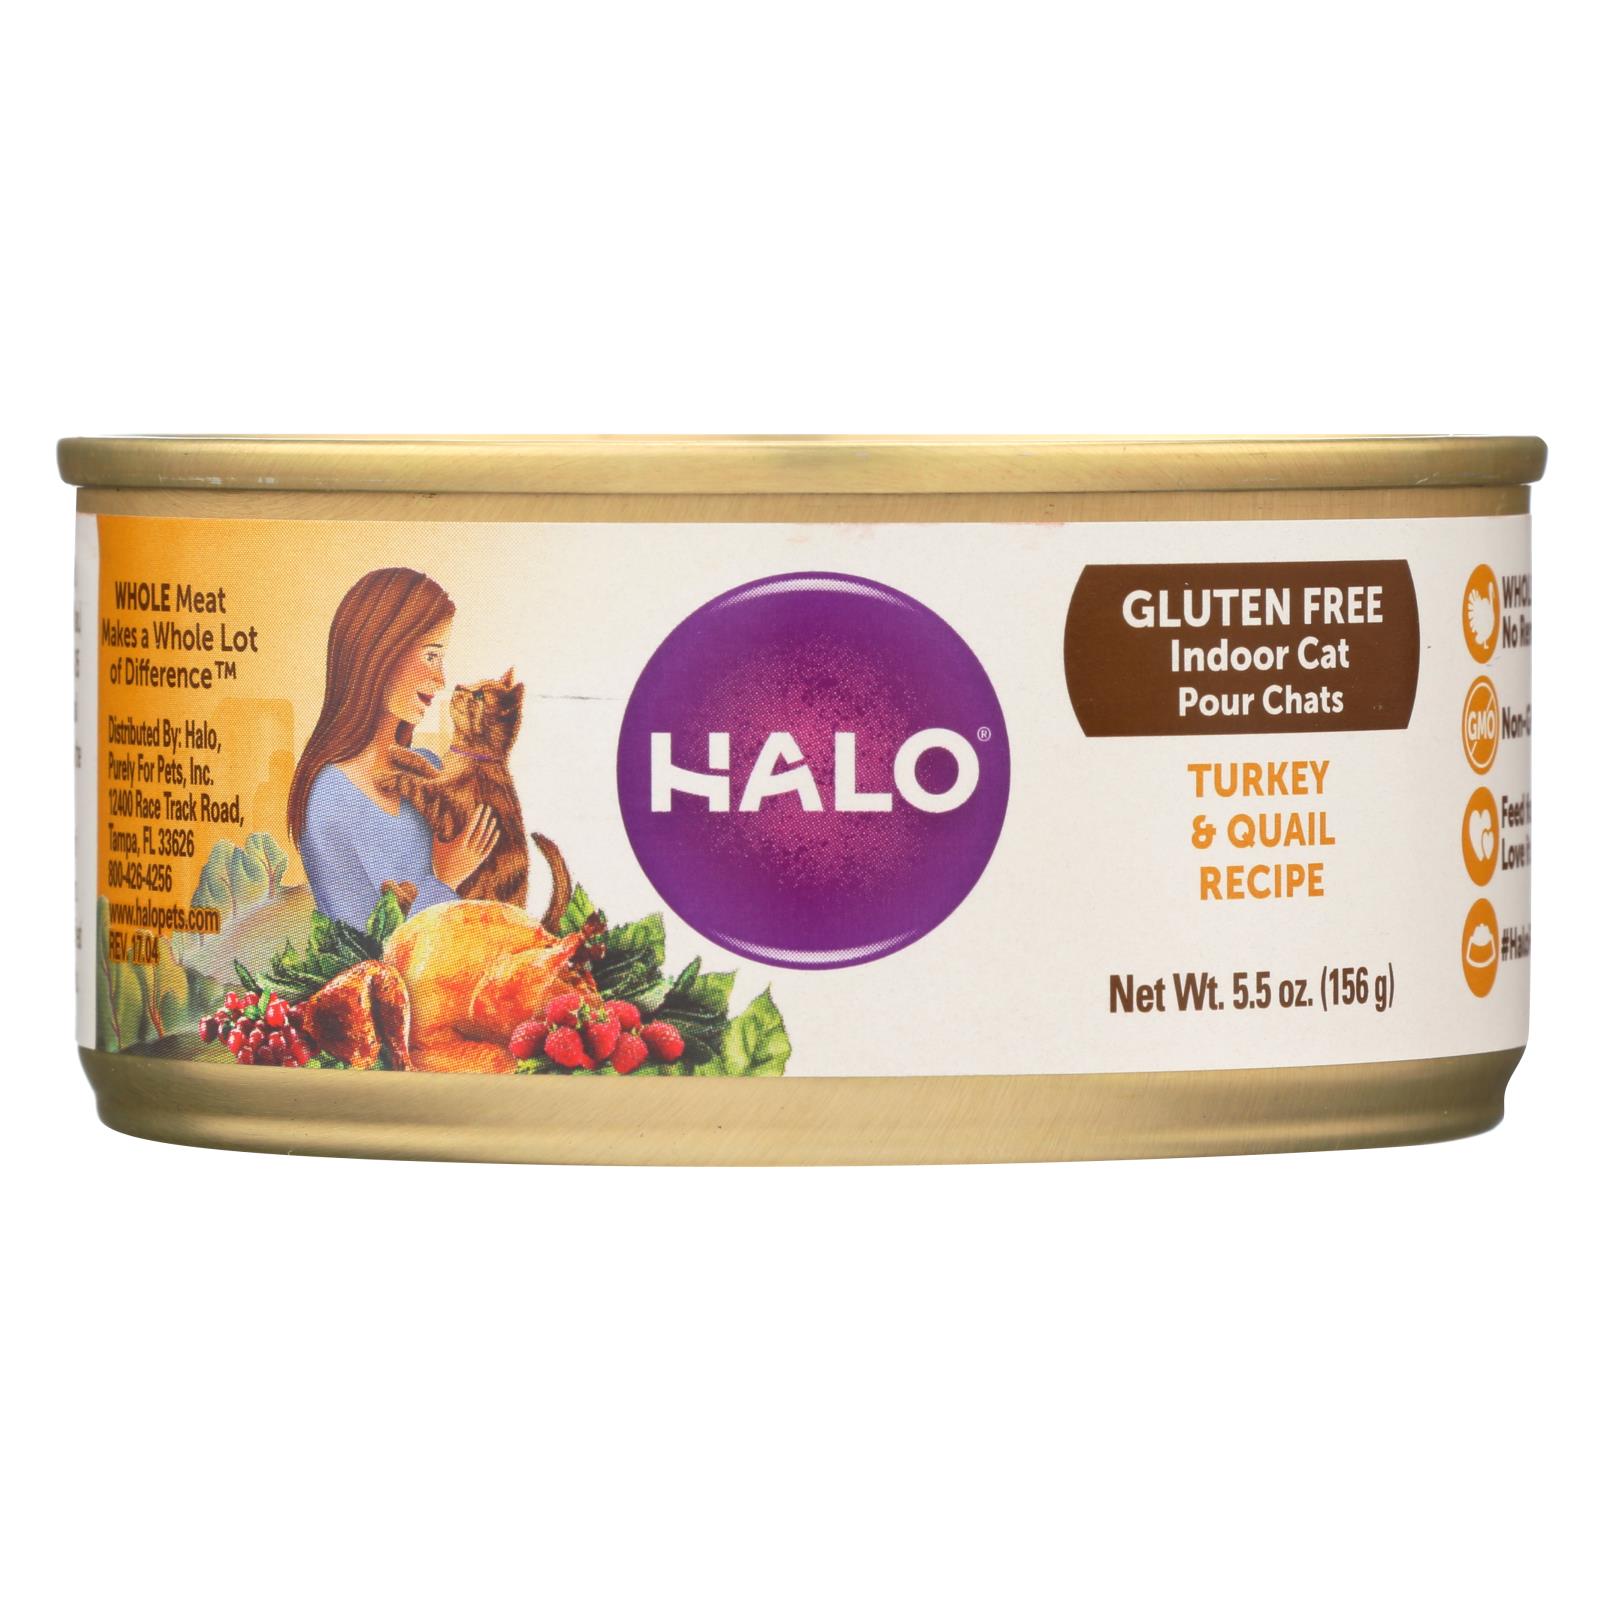 Halo Gluten-Free Indoor Cat Turkey & Quail Recipe - 12개 묶음상품 - 5.5 OZ